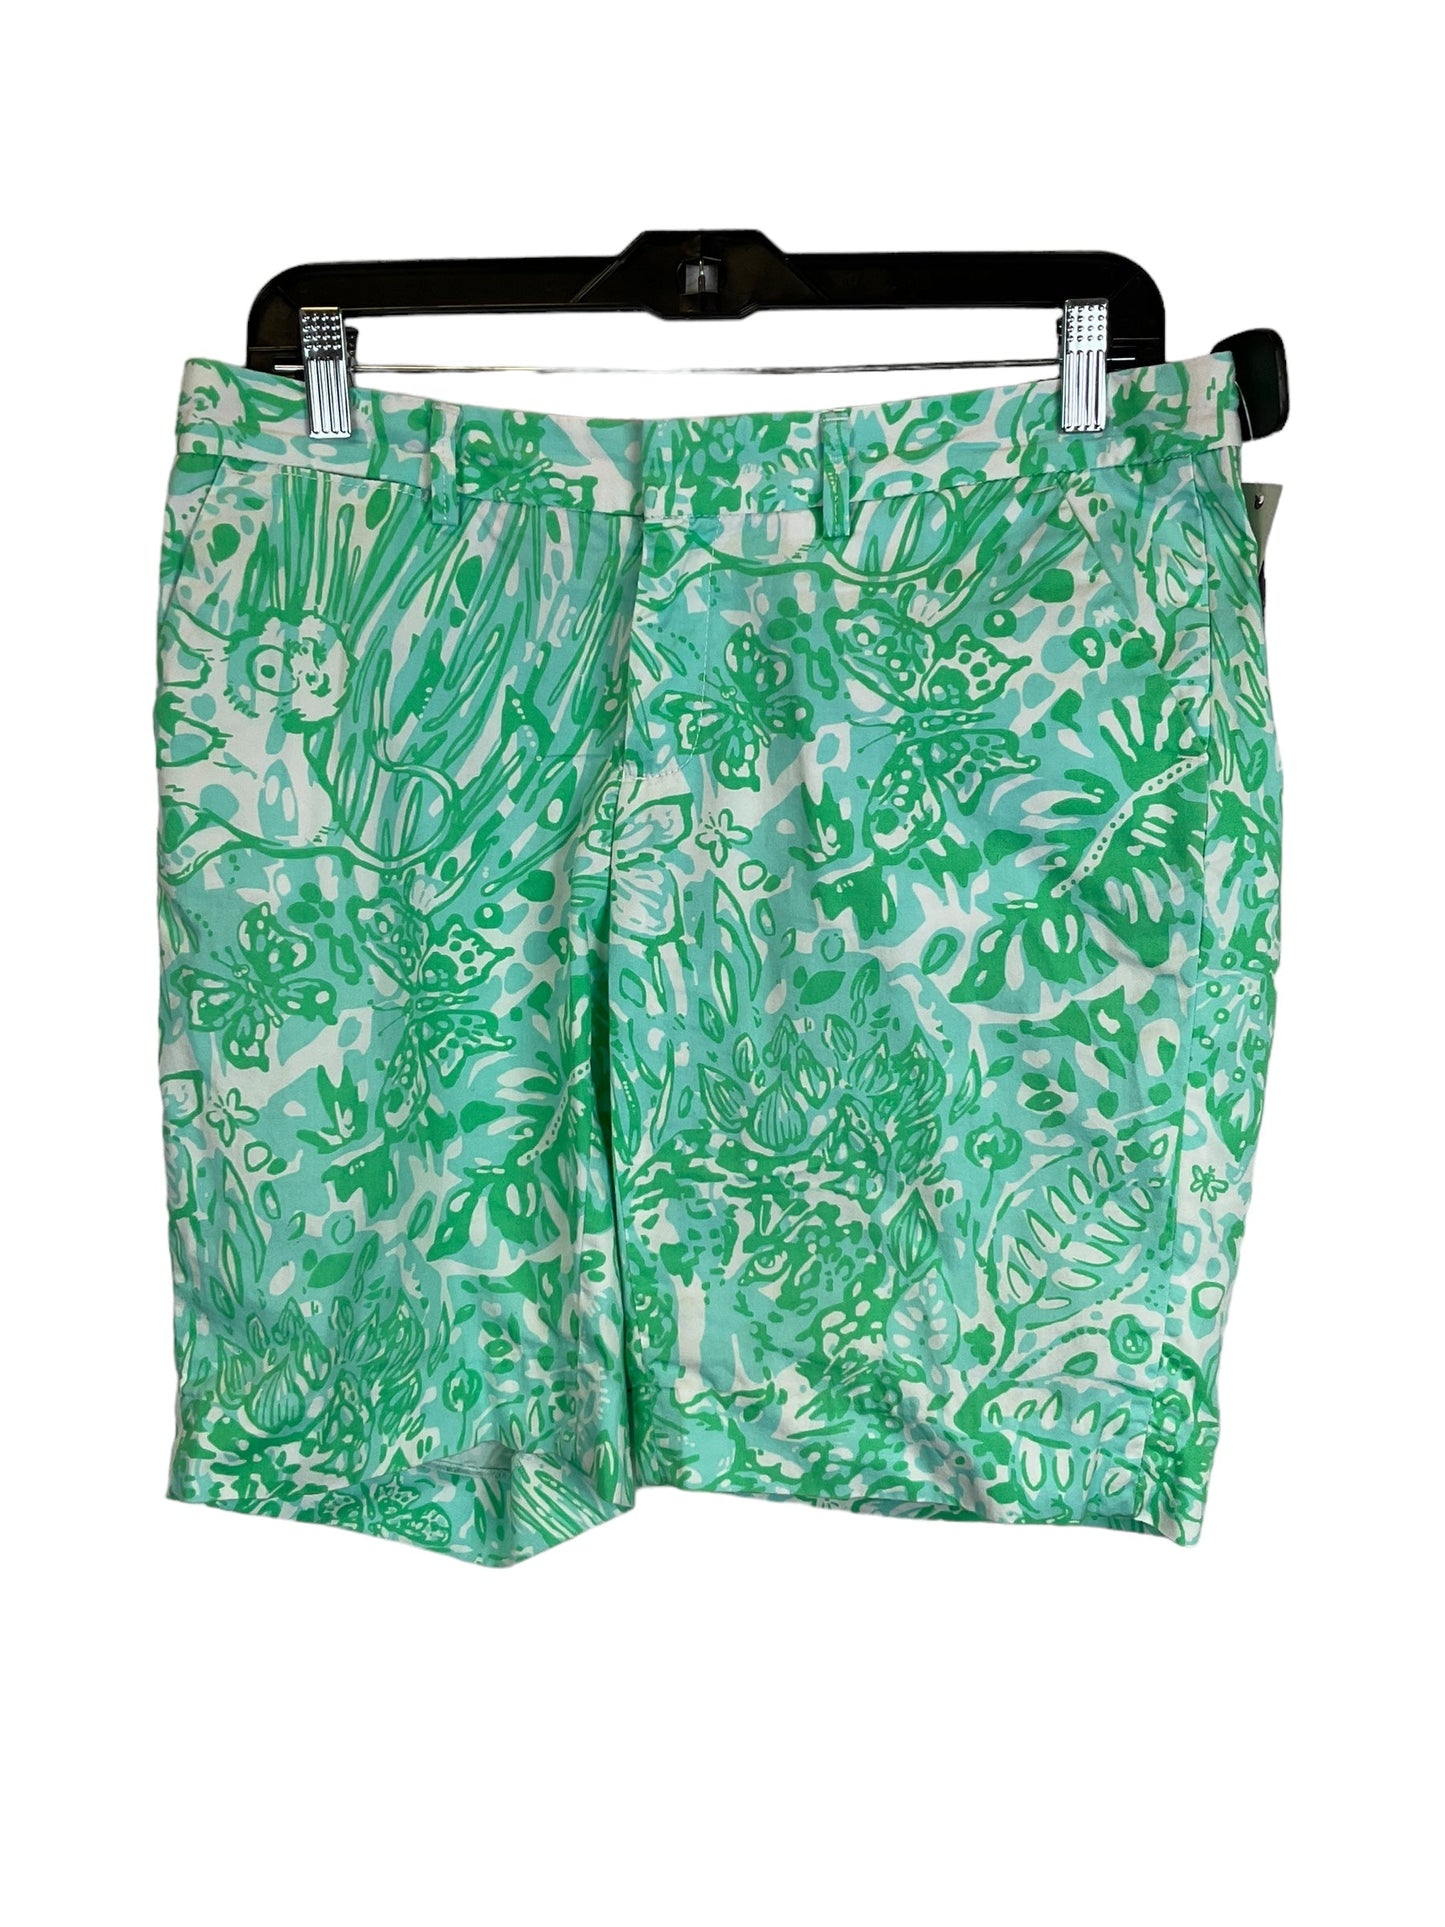 Green Shorts Designer Lilly Pulitzer, Size 4